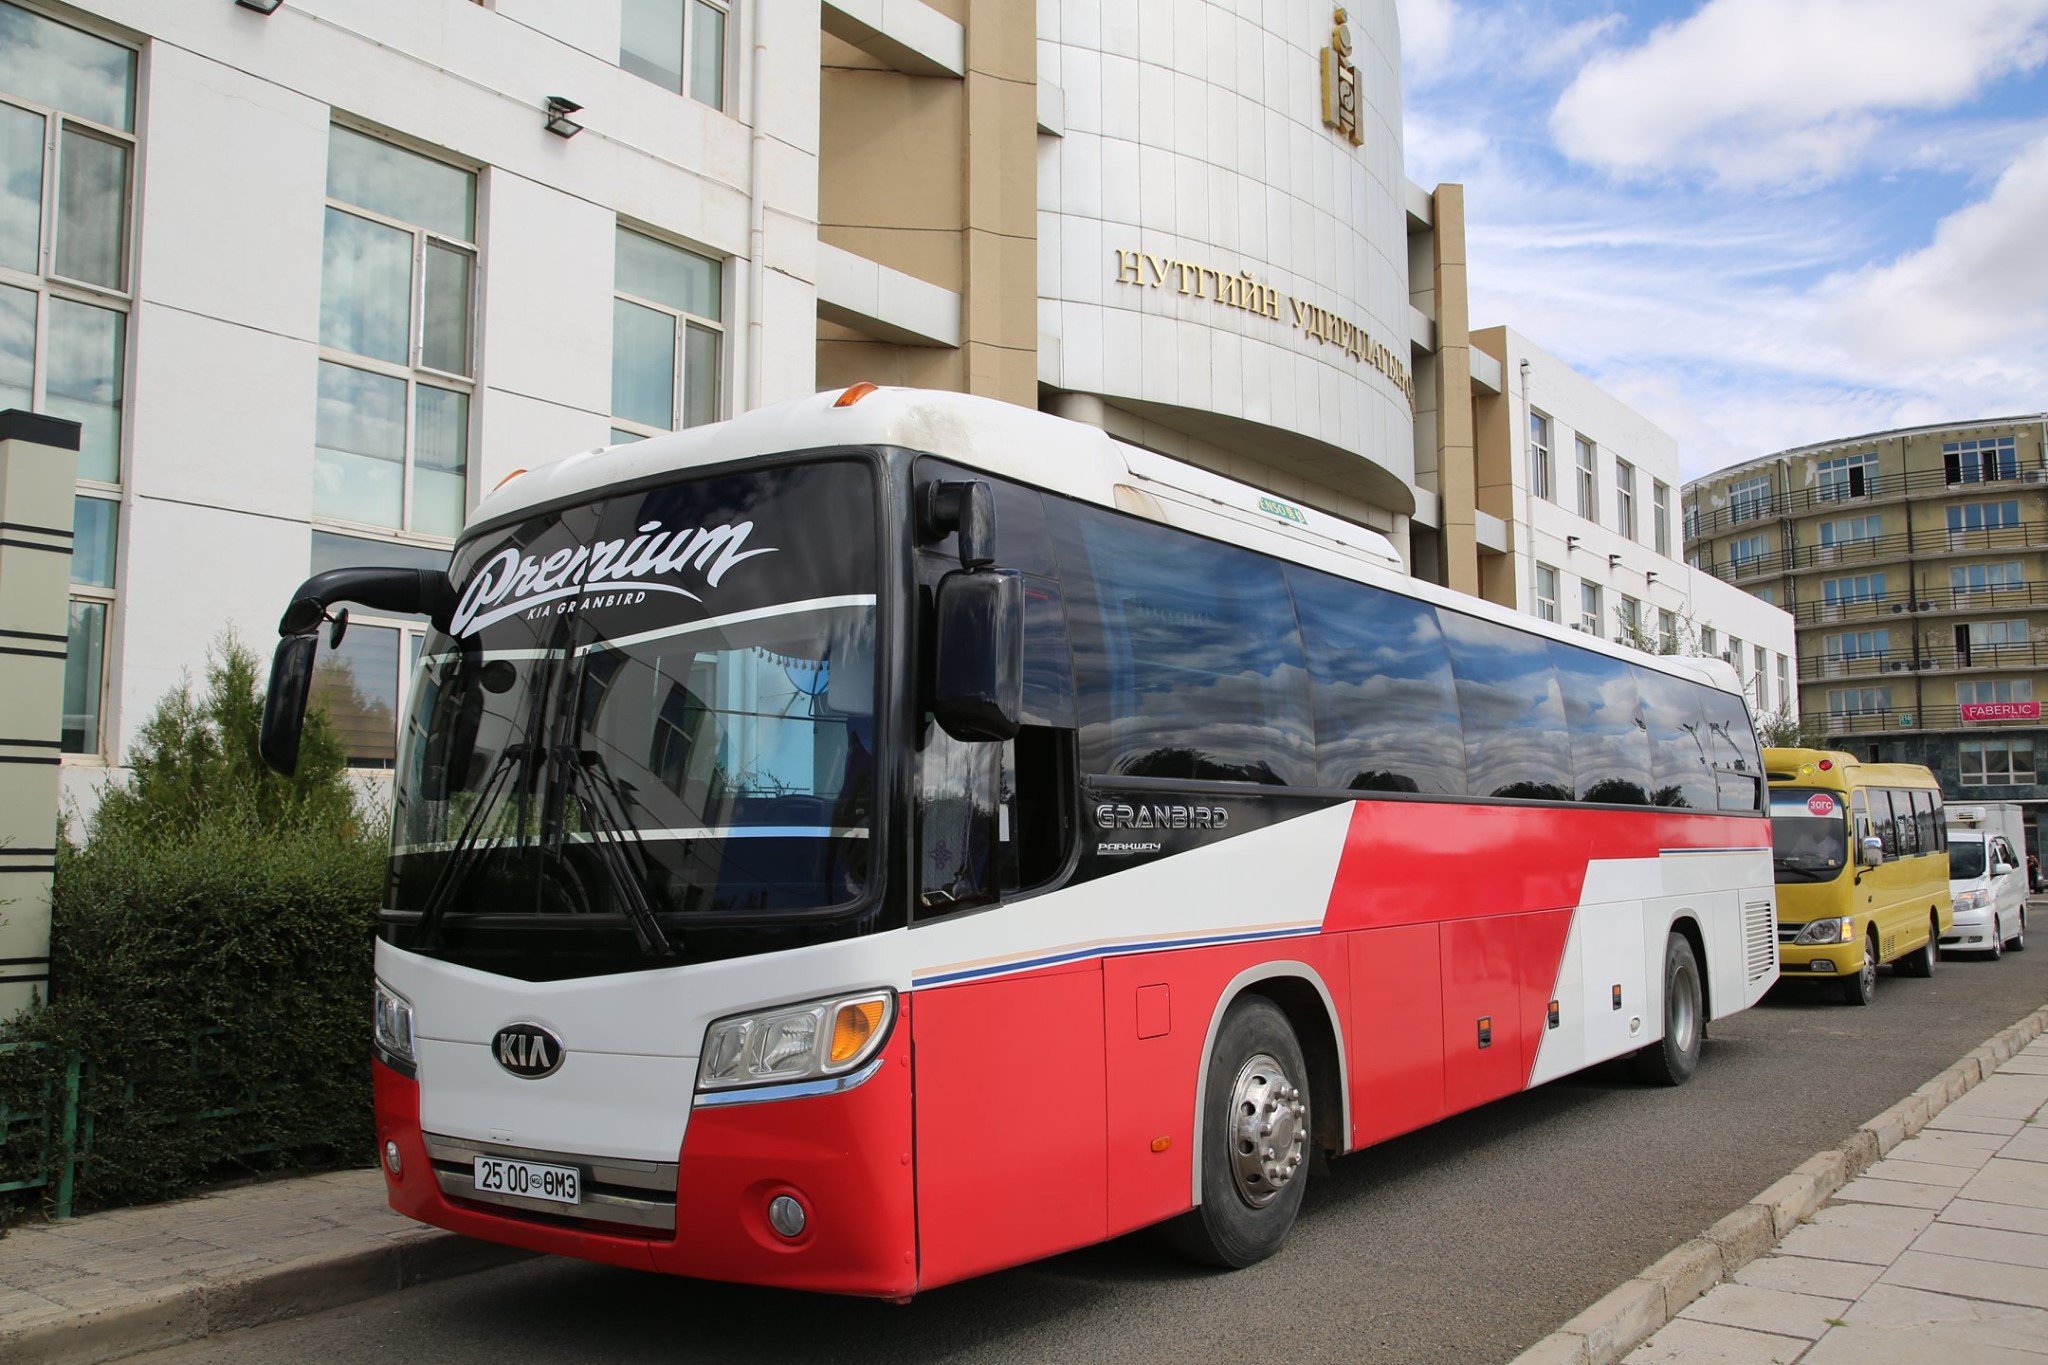 Өмнөговь: Боловсролын салбарт автомашин, автобус шийдэж өглөө